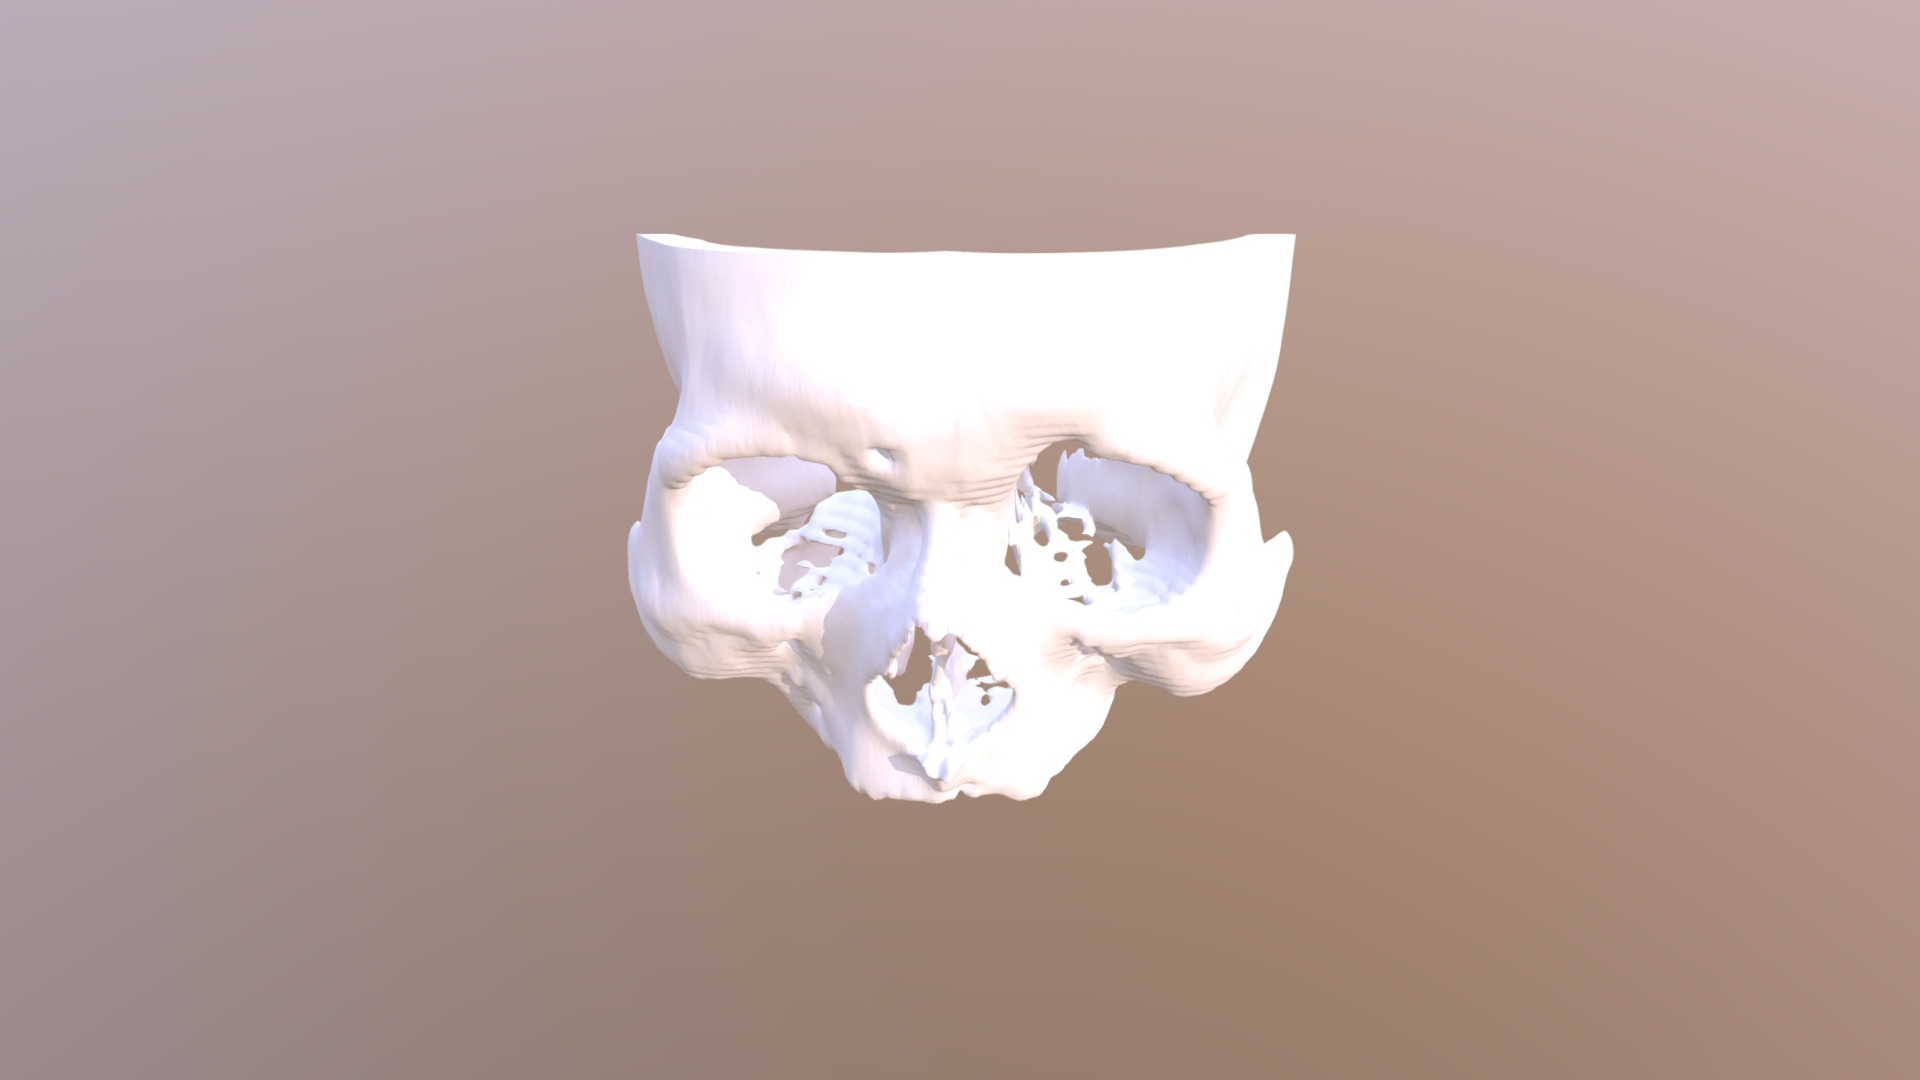 3D model Recurrent frontal sinusitis – Ant. Skull - This is a 3D model of the Recurrent frontal sinusitis - Ant. Skull. The 3D model is about a white tissue paper roll.